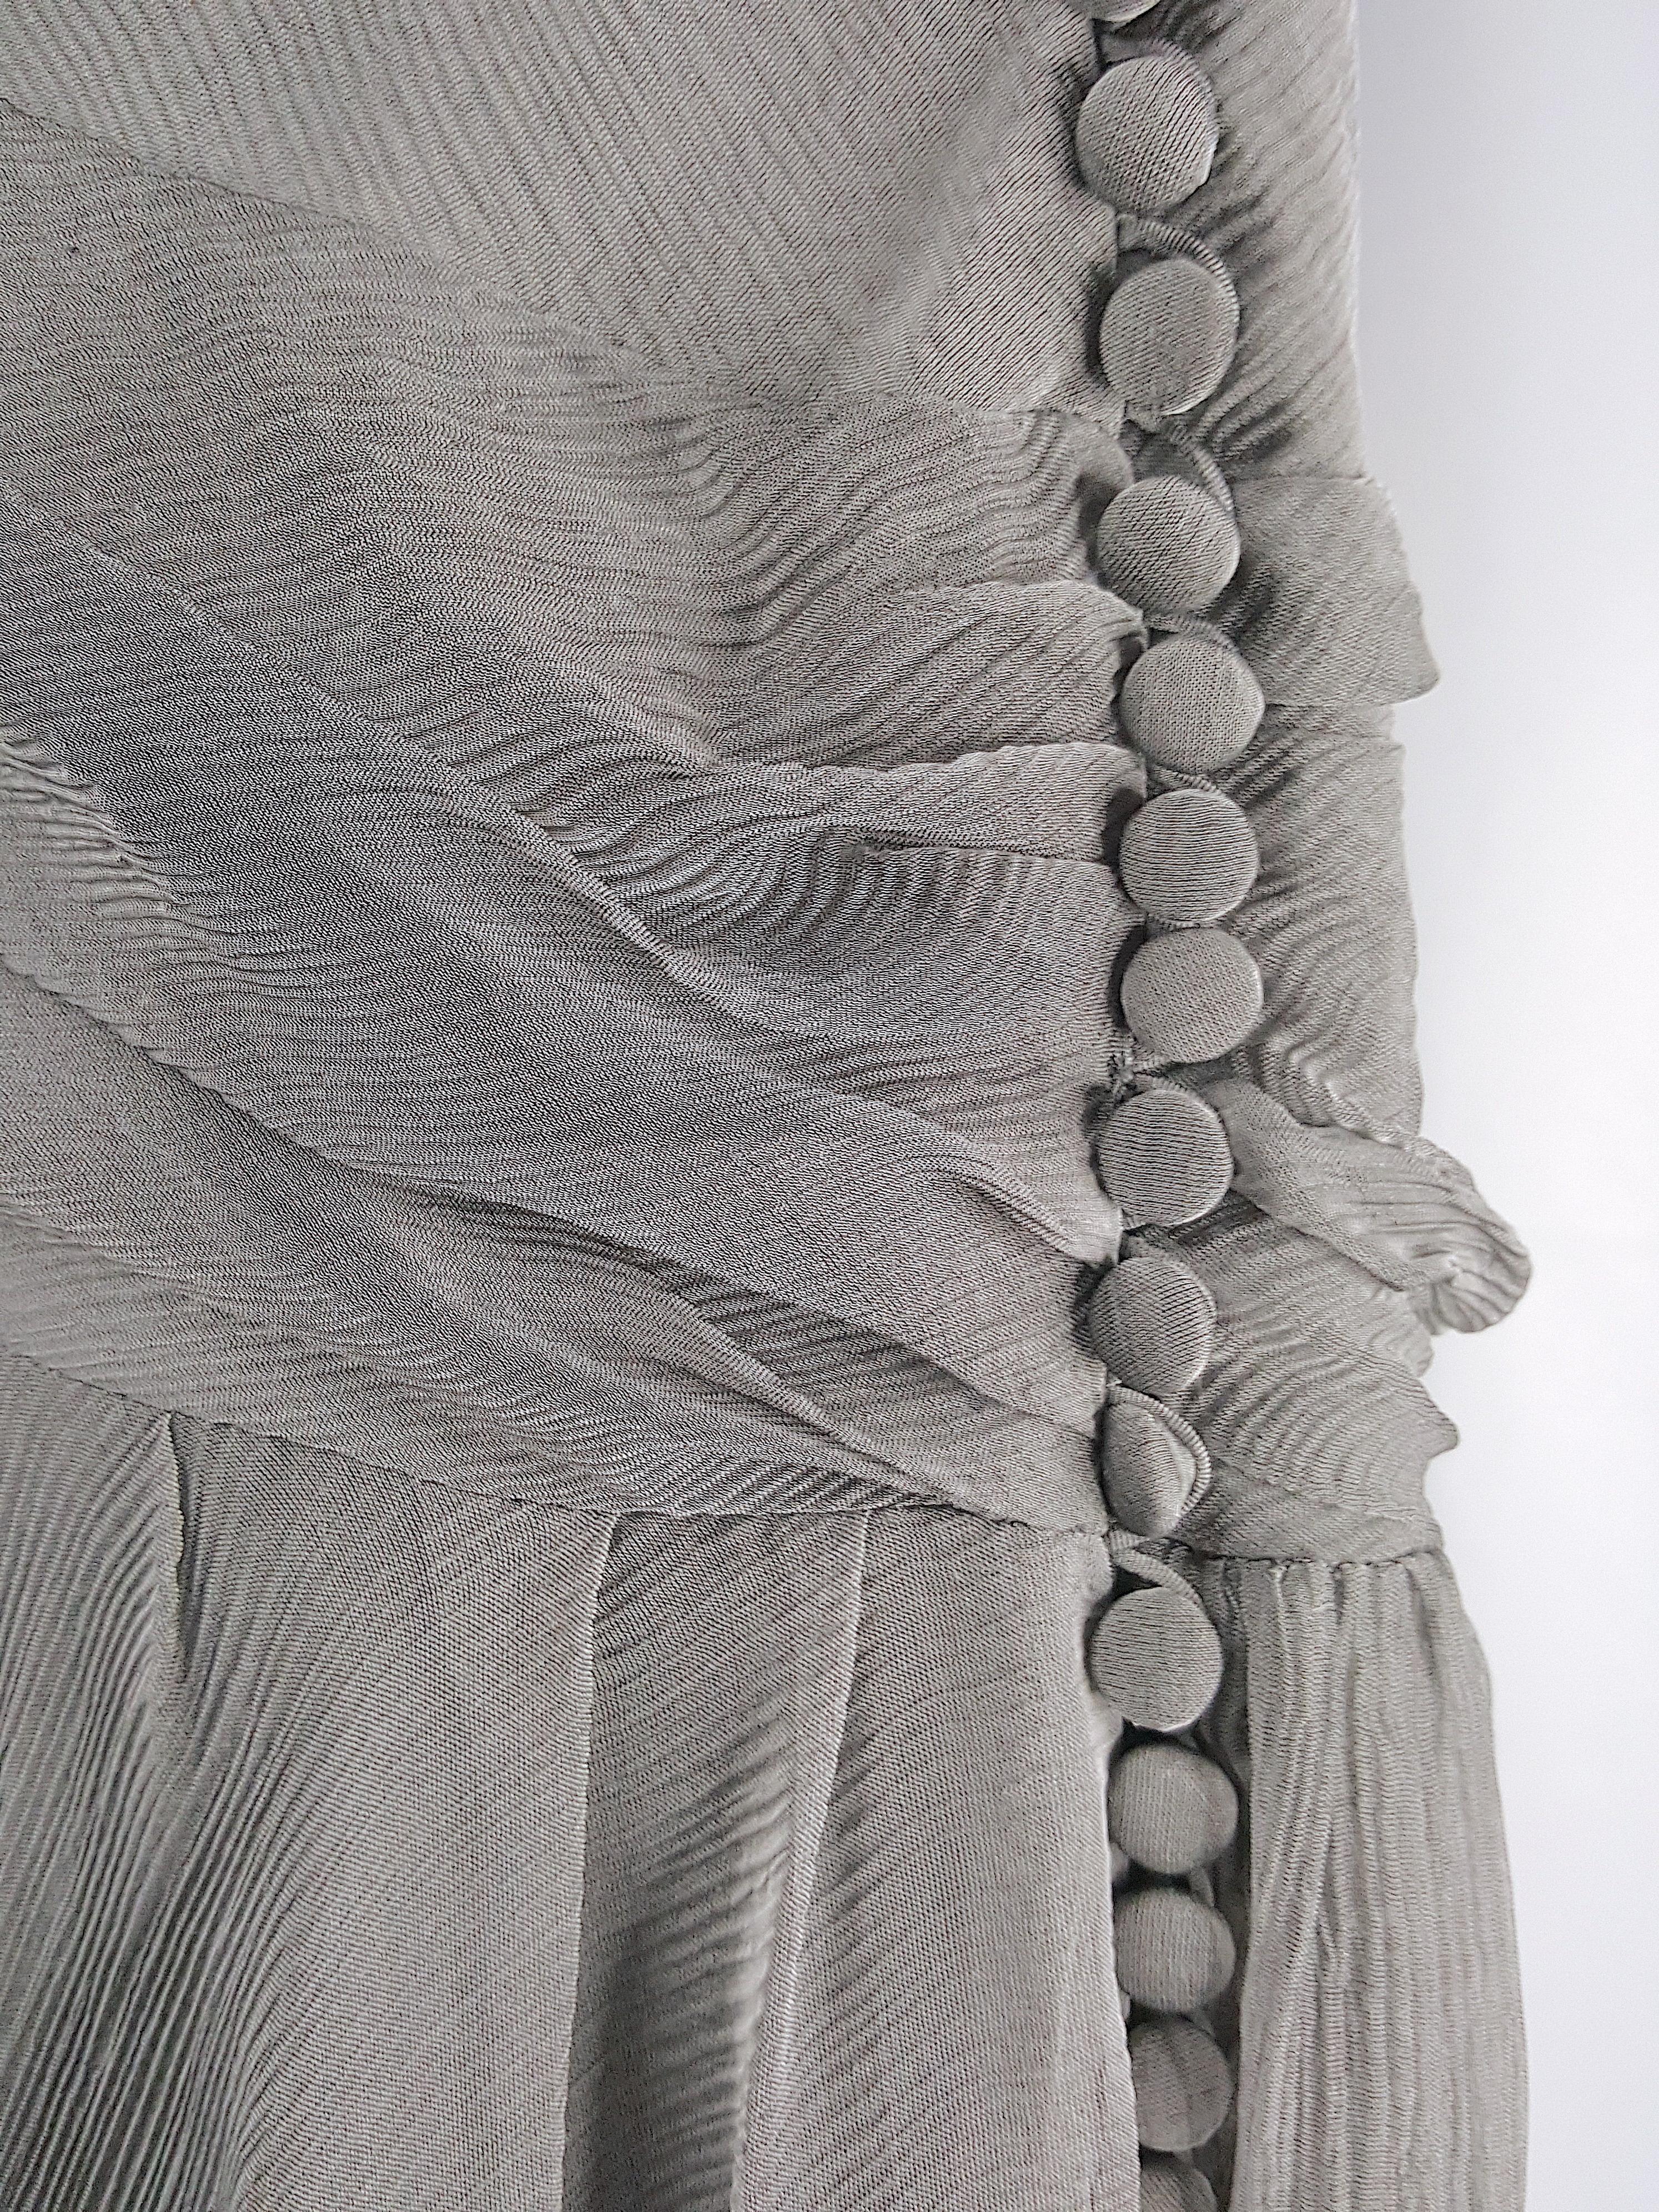 JohnGalliano 1stYearChristianDior - Robe de ballerine en géorgette de soie superposée coupée en biais en vente 13